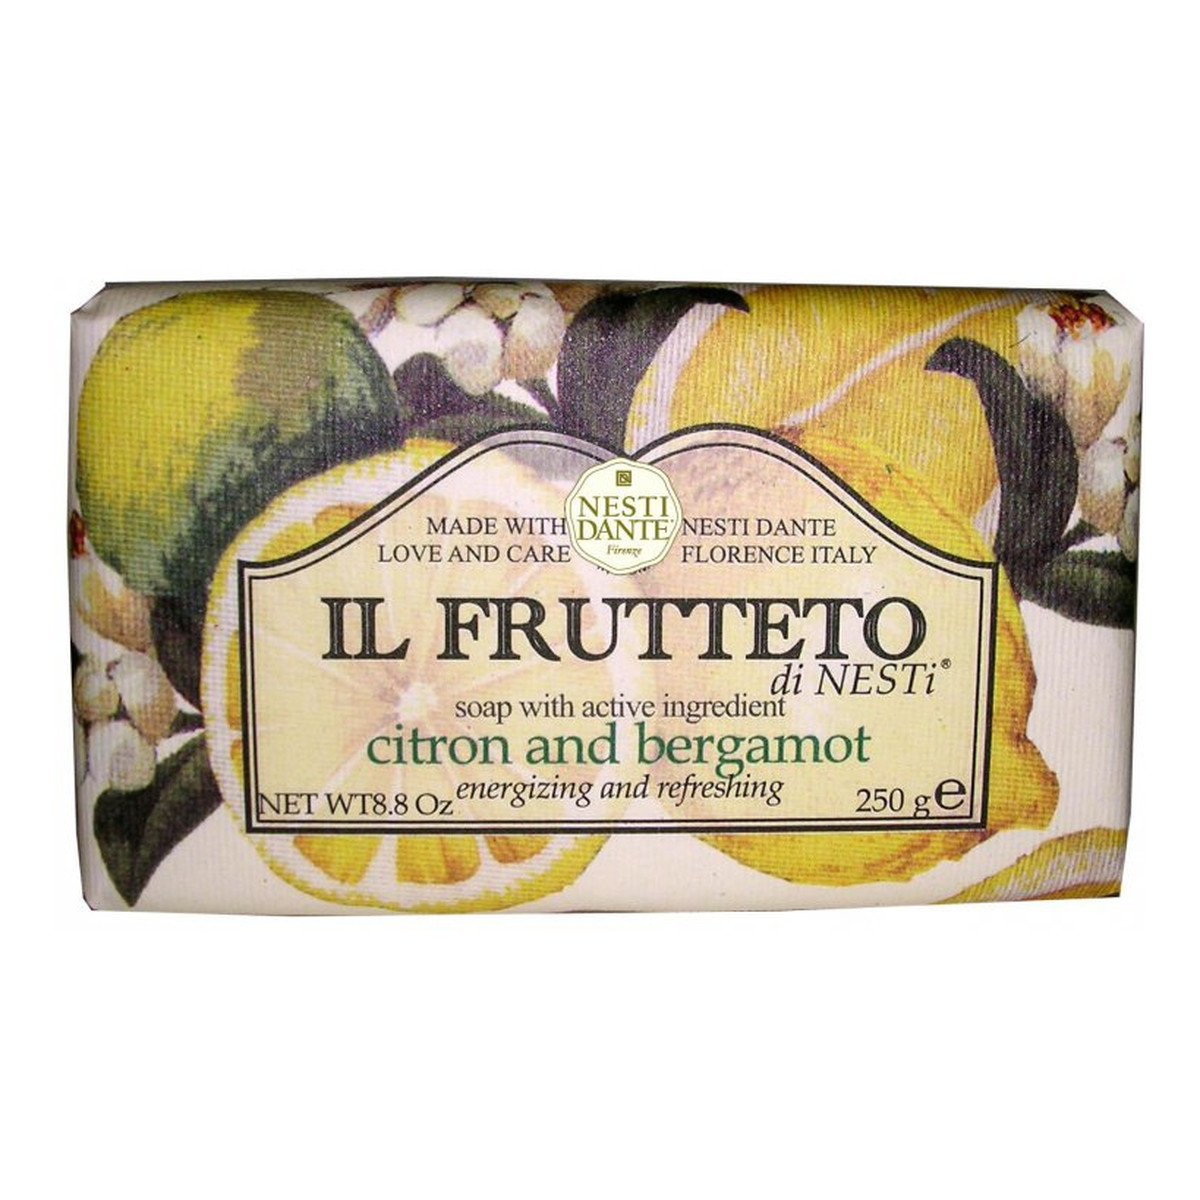 Nesti Dante Il Frutteto mydło na bazie cytryny i bergamotki 250g